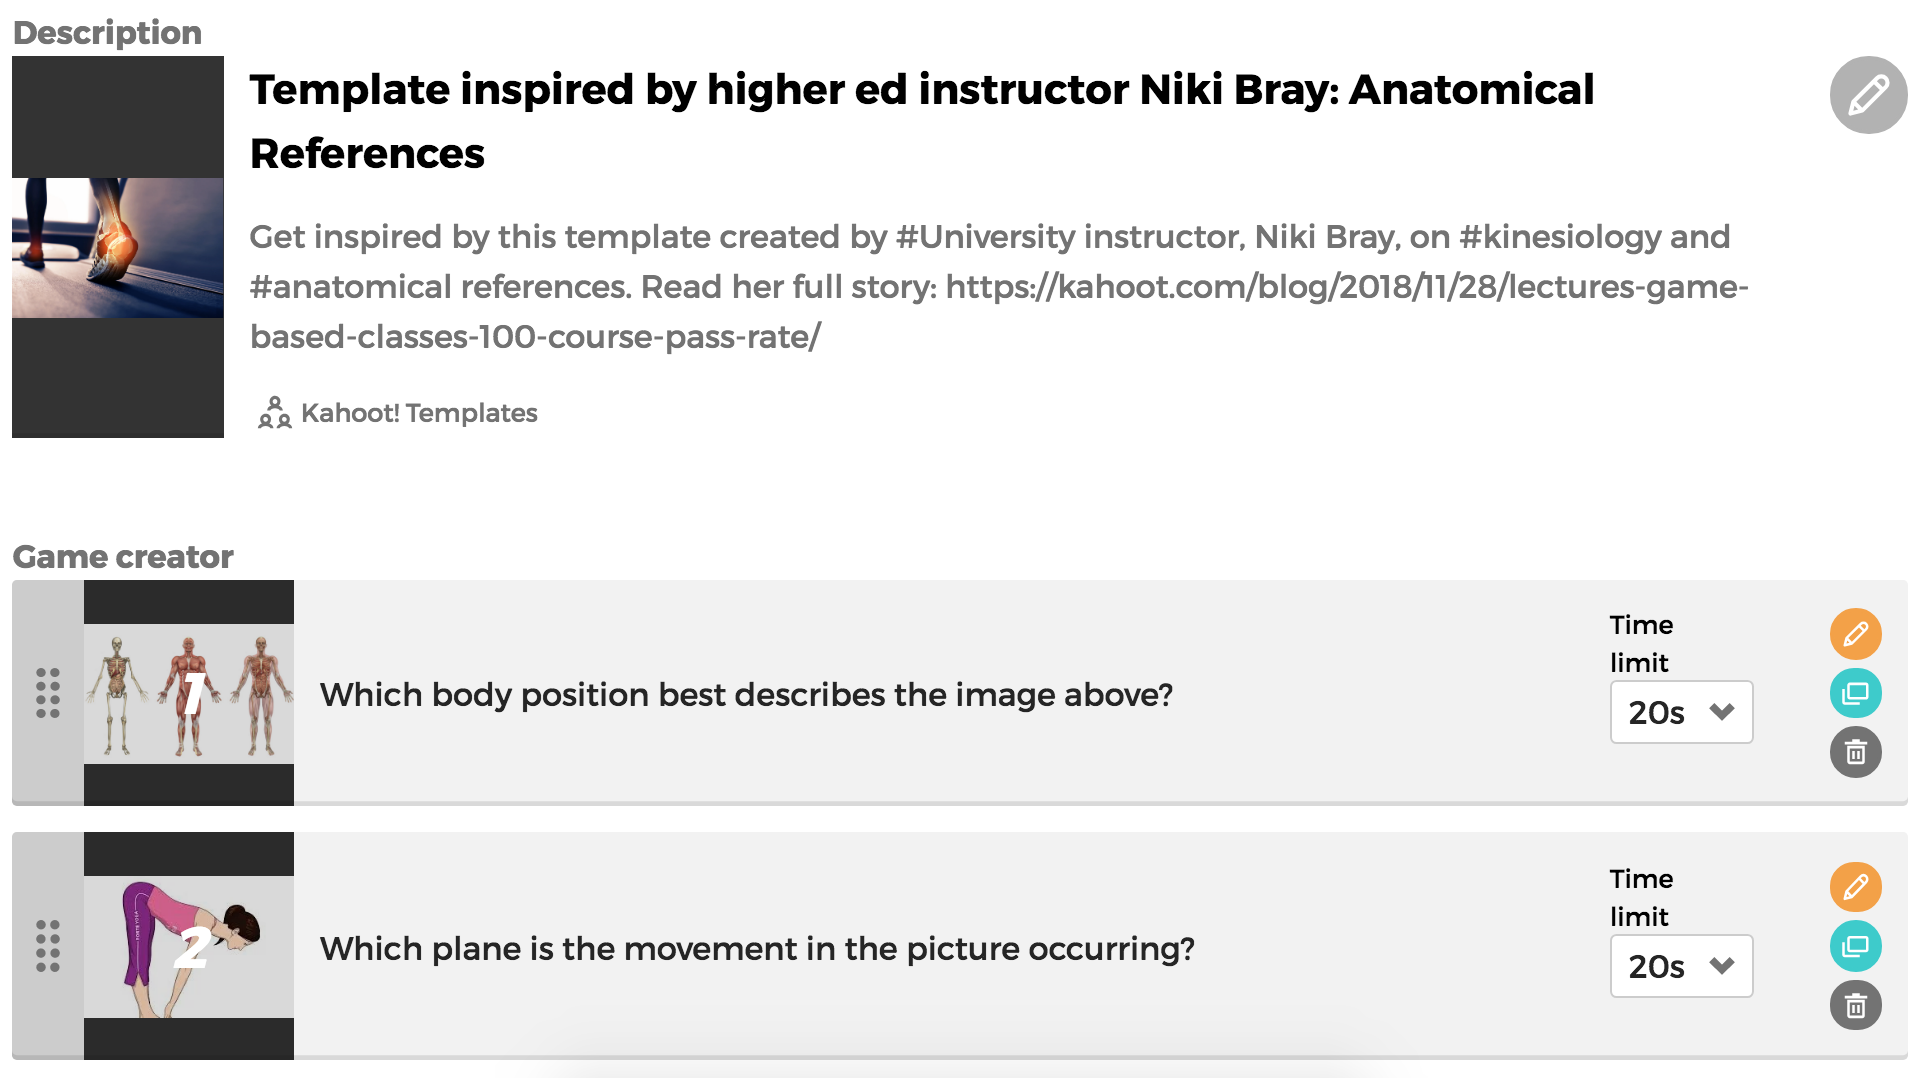 Screen shot of Niki Bray's kahoot template on anatomical references